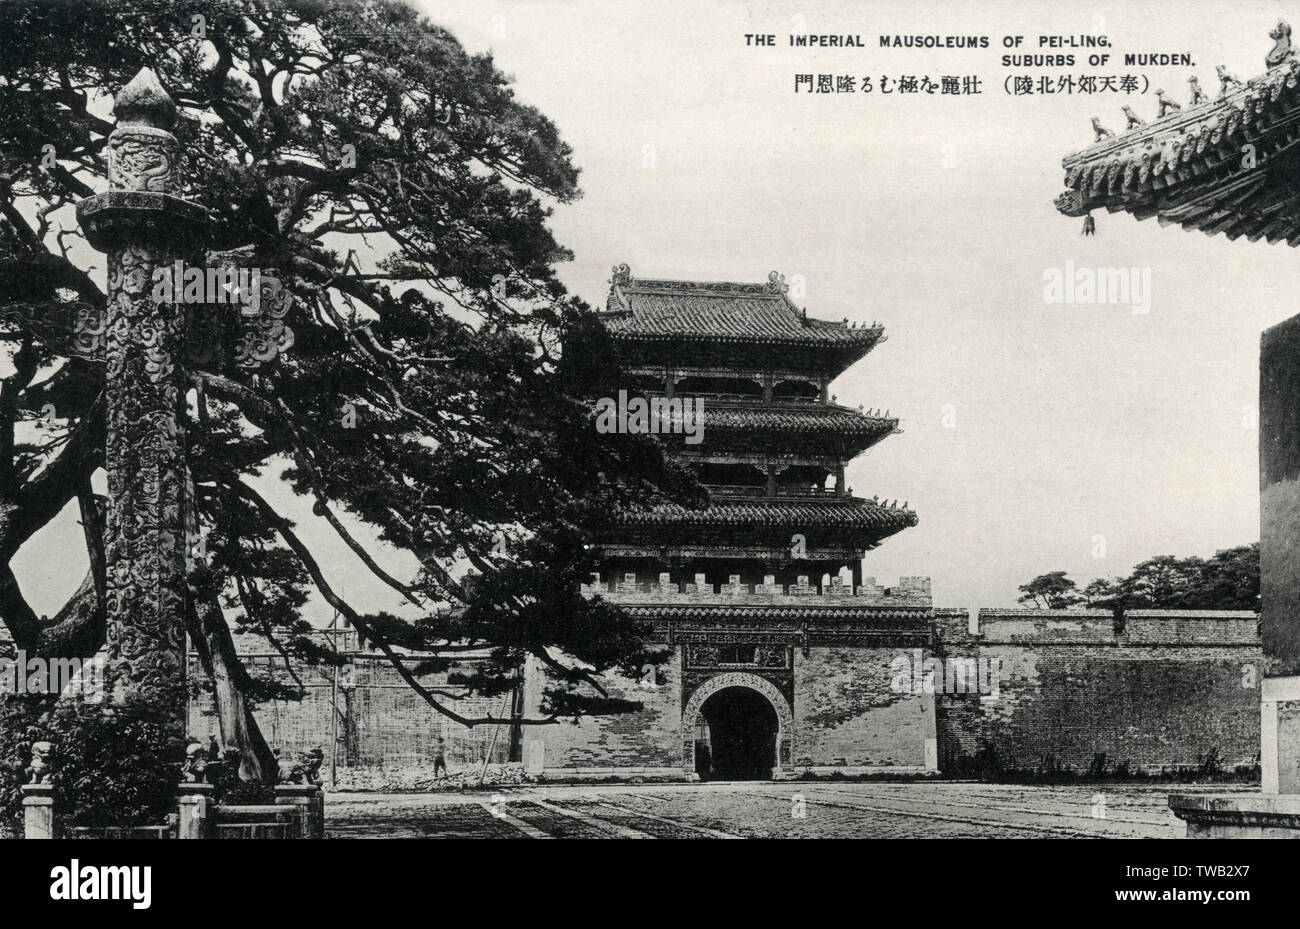 The Fuling Mausoleum, Qing Dynasty - Shenyang, China Stock Photo